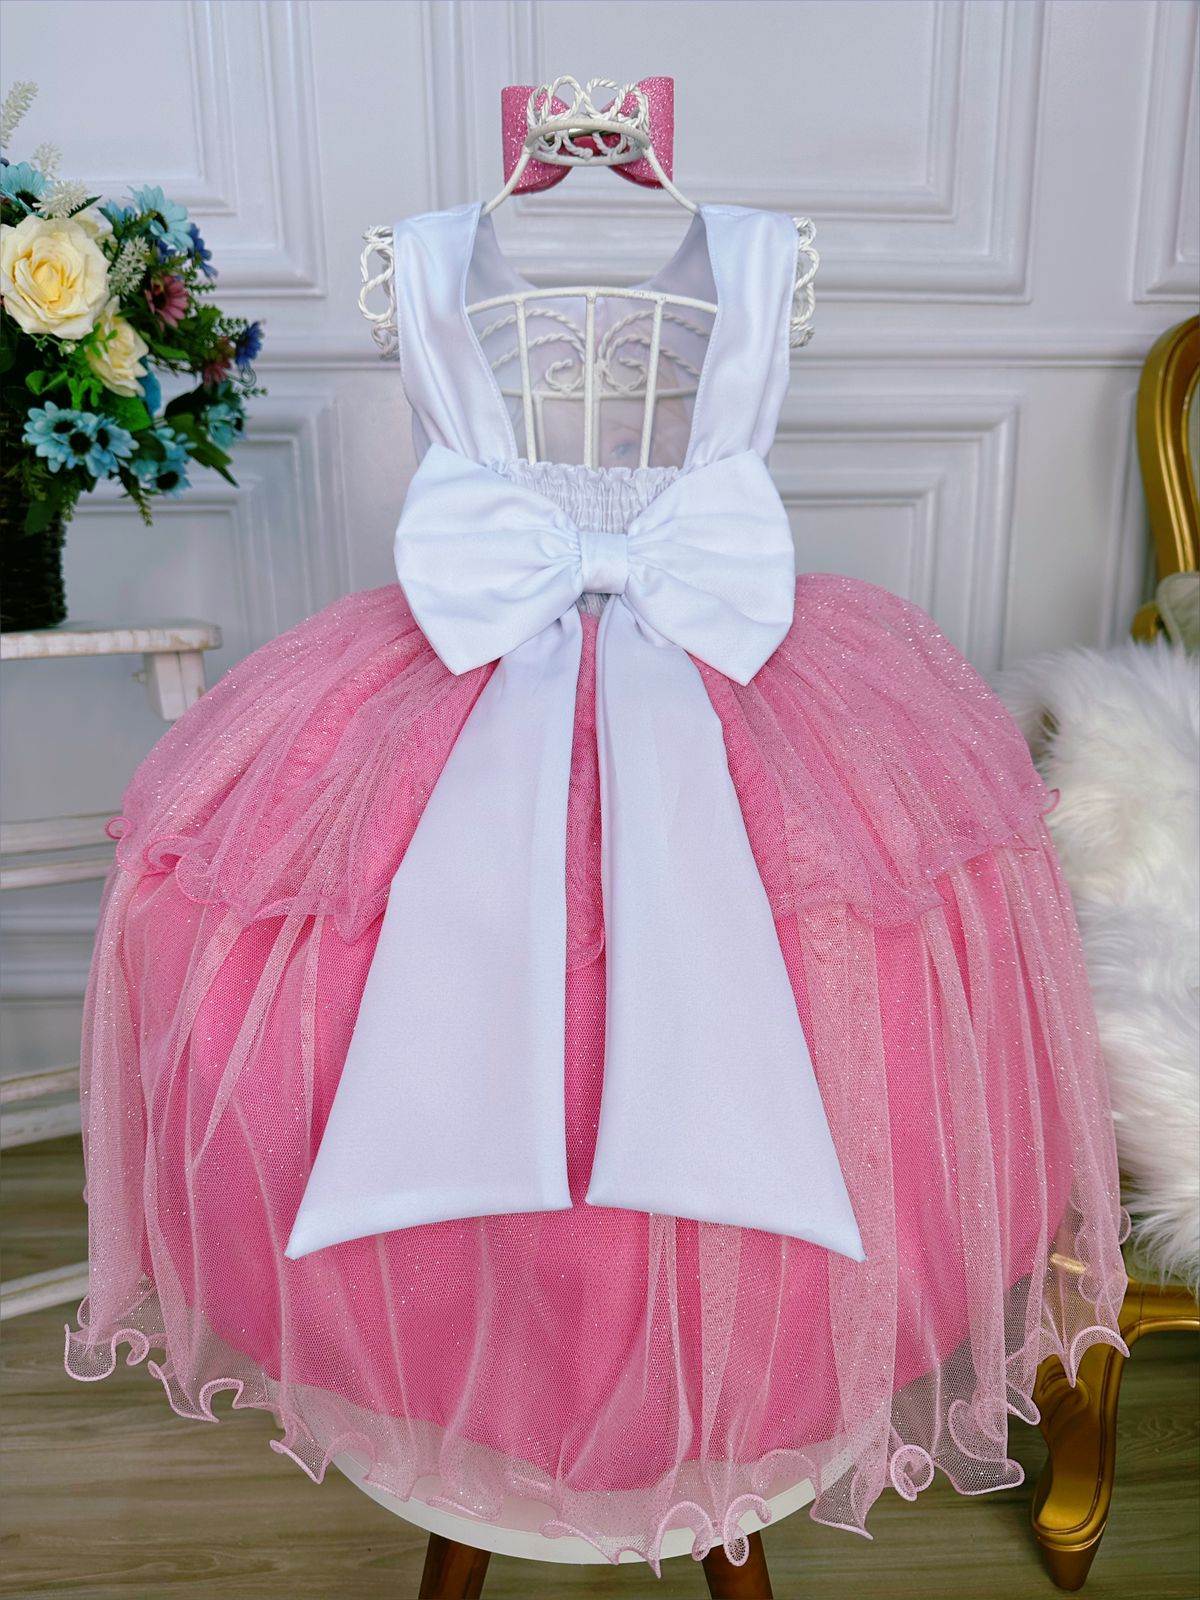 Vestido infantil da Barbie princesa na cor rosa